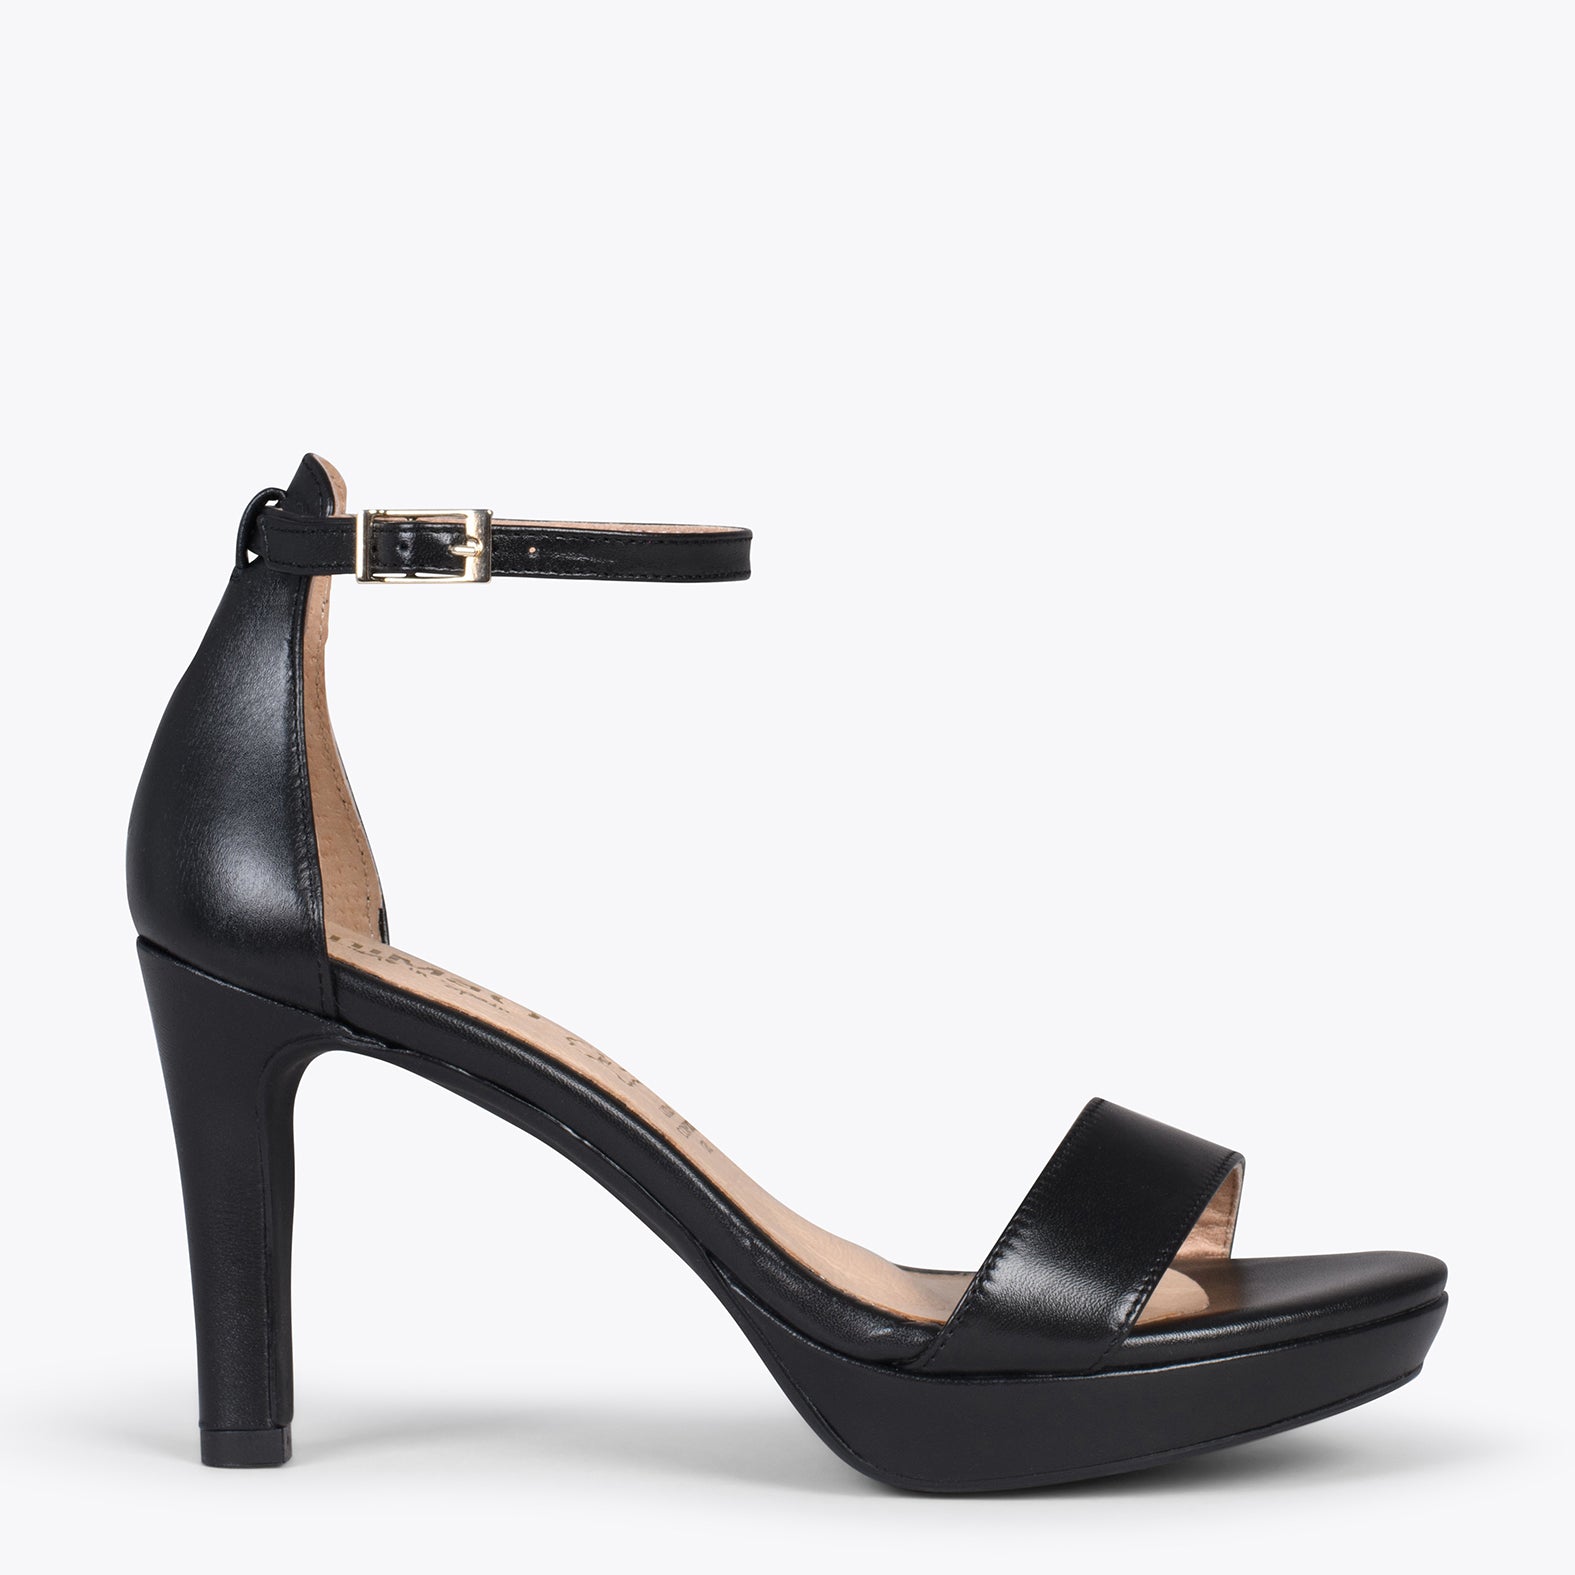 PARTY – BLACK high heel sandals with platform